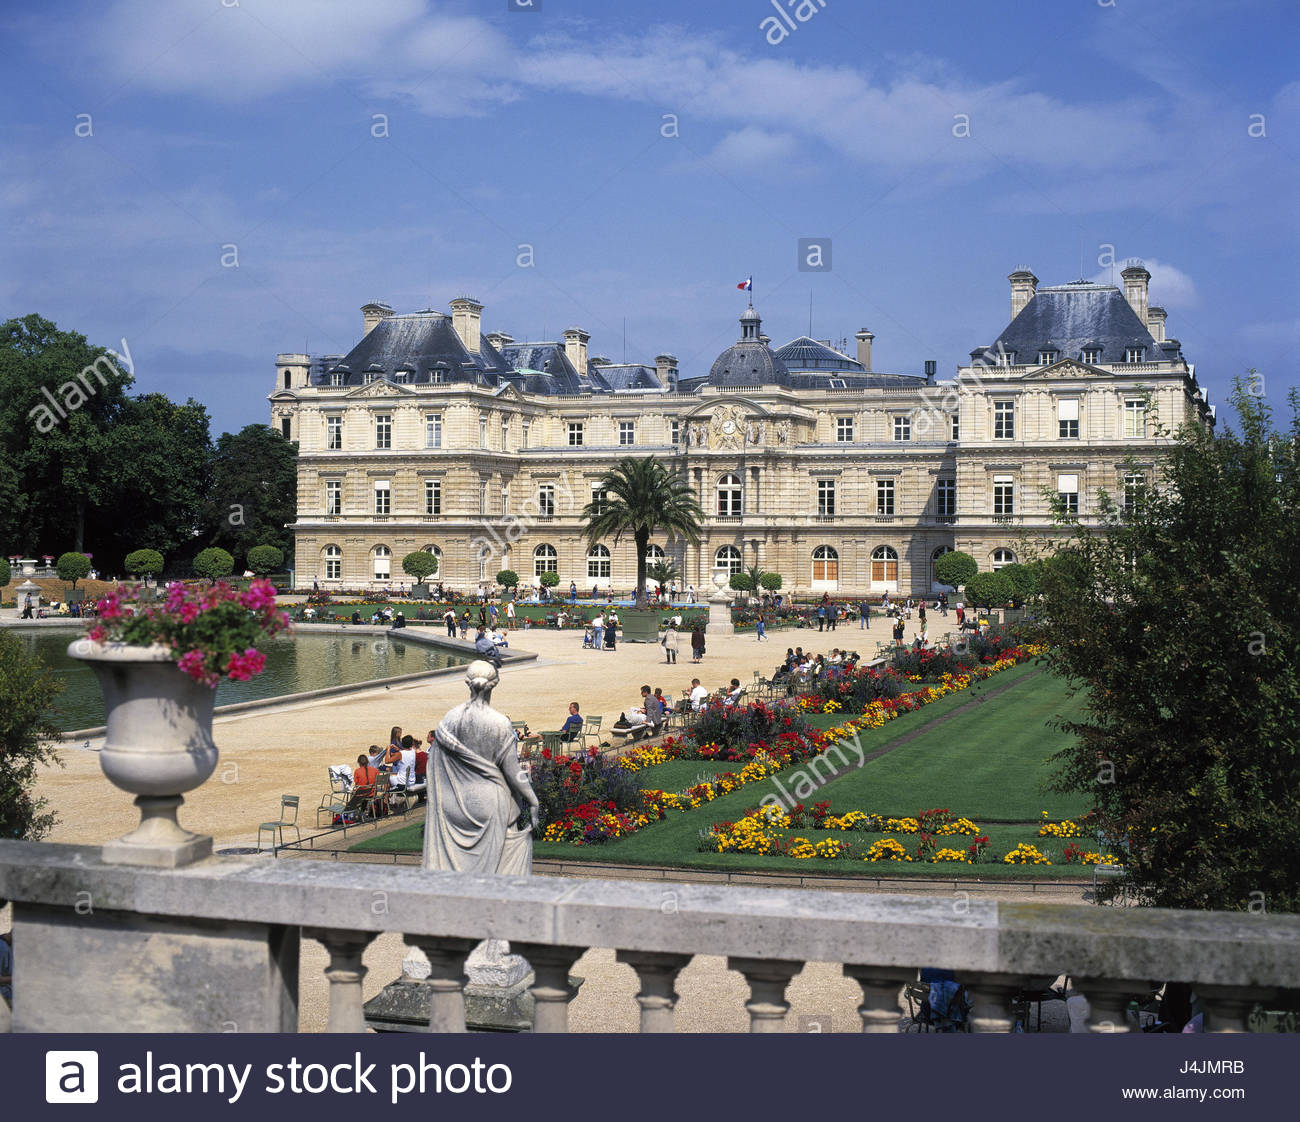 france paris palace you luxembourg jardin you luxembourg tourists J4JMRB